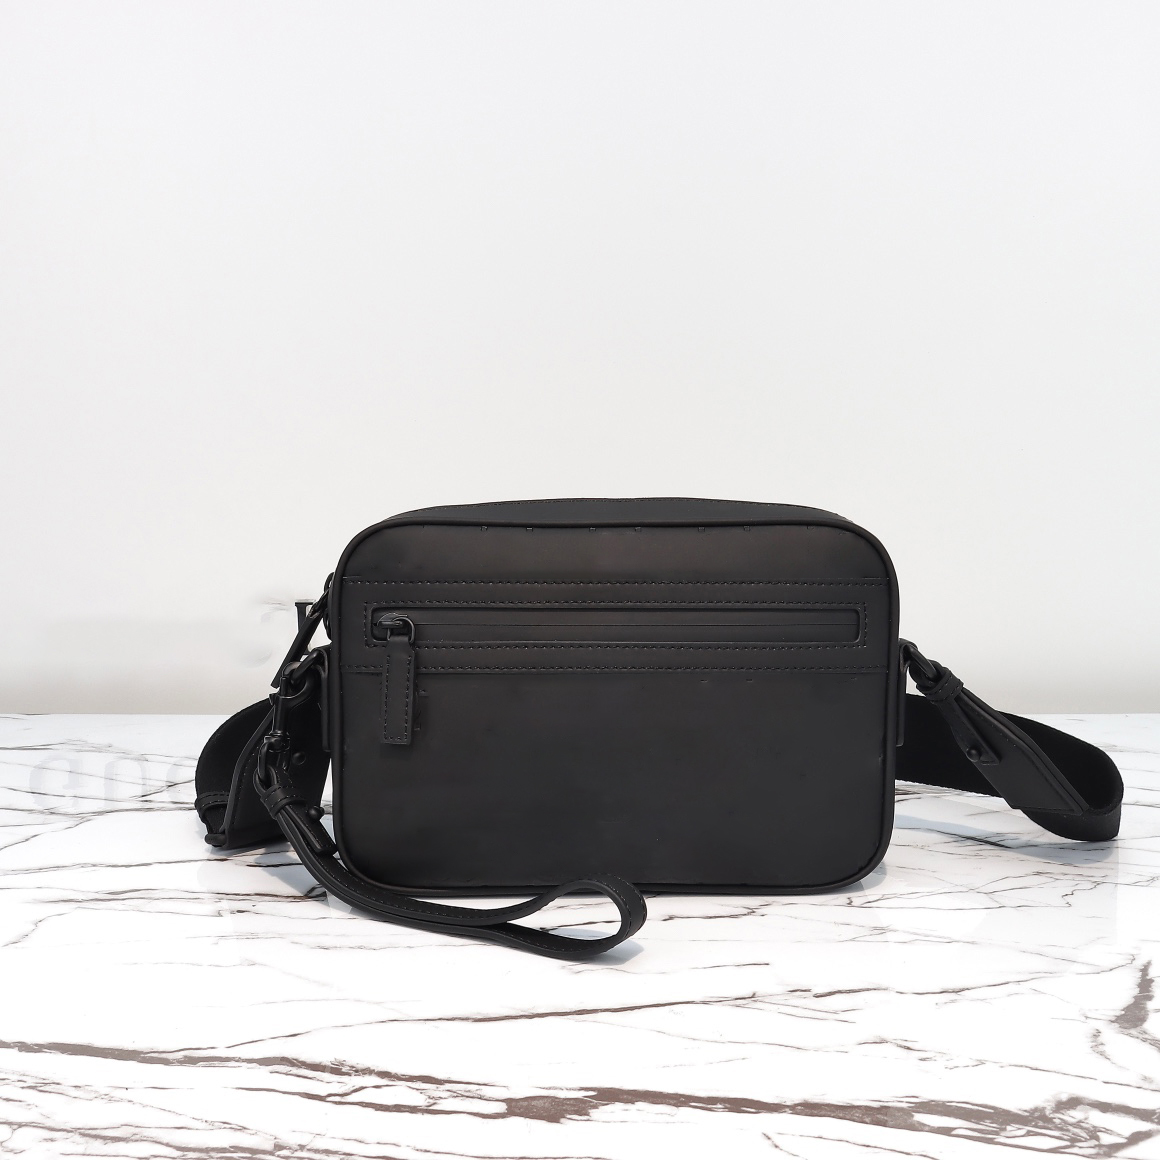 Luxury Designer Bag New G77 Fashion Shoulder Bag G1293 Leather Molding configuration Essentials lightweight fabrics soft and comfortable essentials women's tote